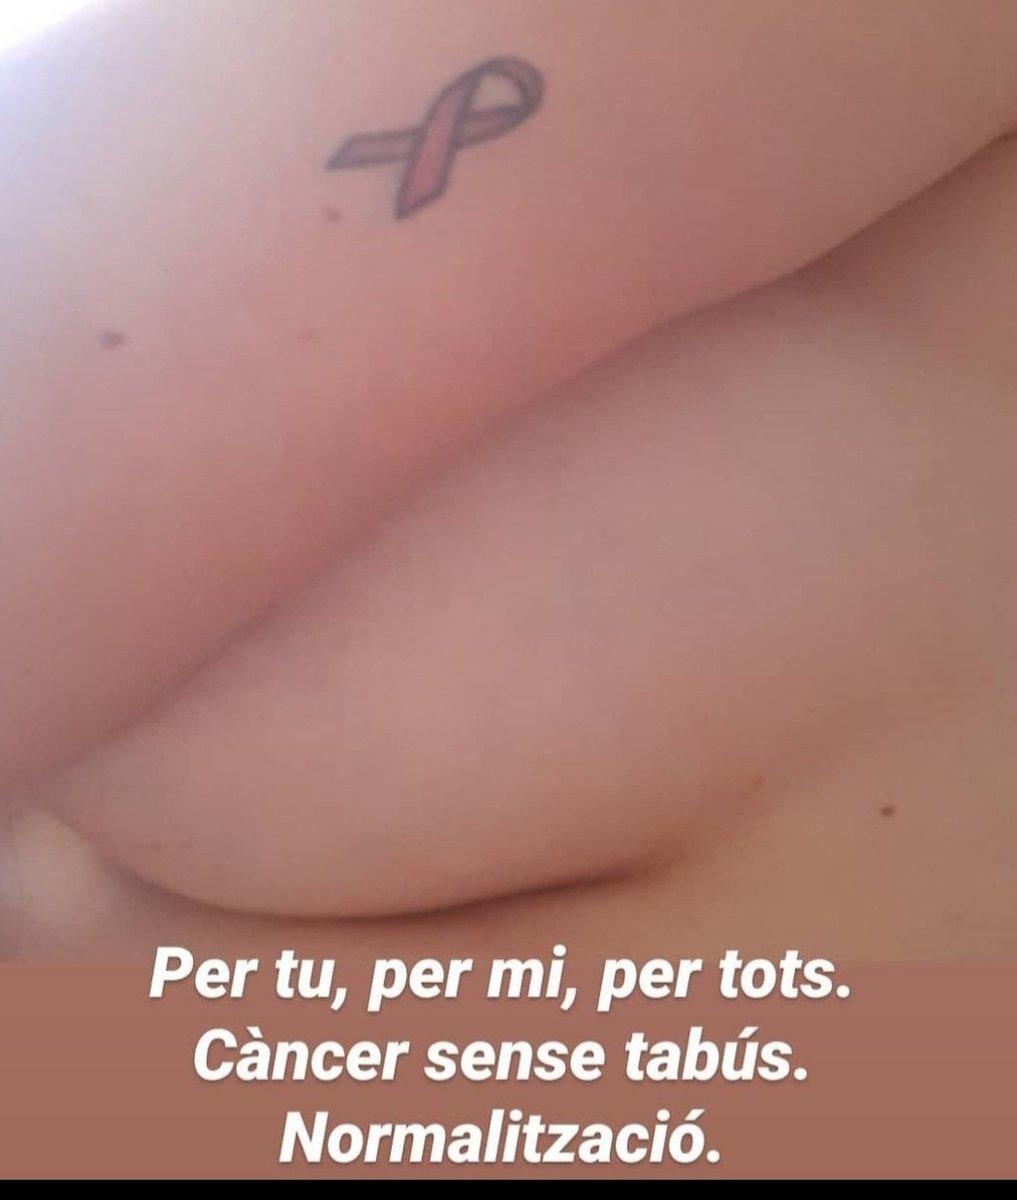 #19Octubre #CancerResearch #cancermama

📸 Selfie #popetapower